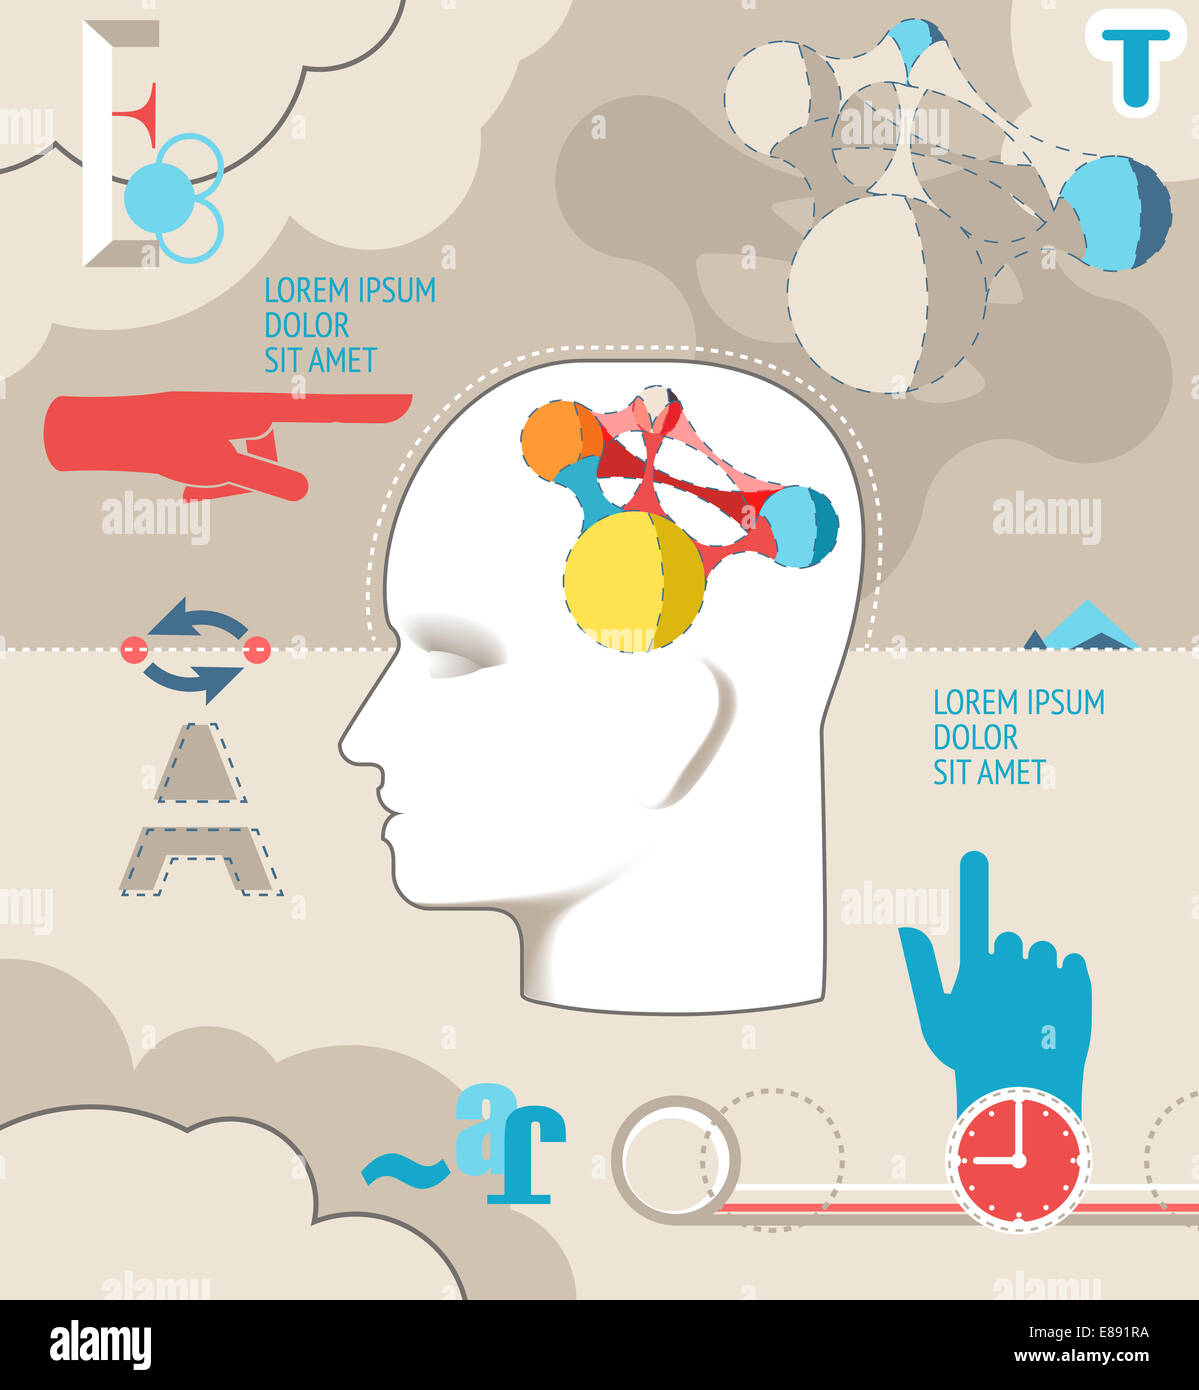 Business concept. Human intelligence illustration. Head, hands, ideas. Stock Photo